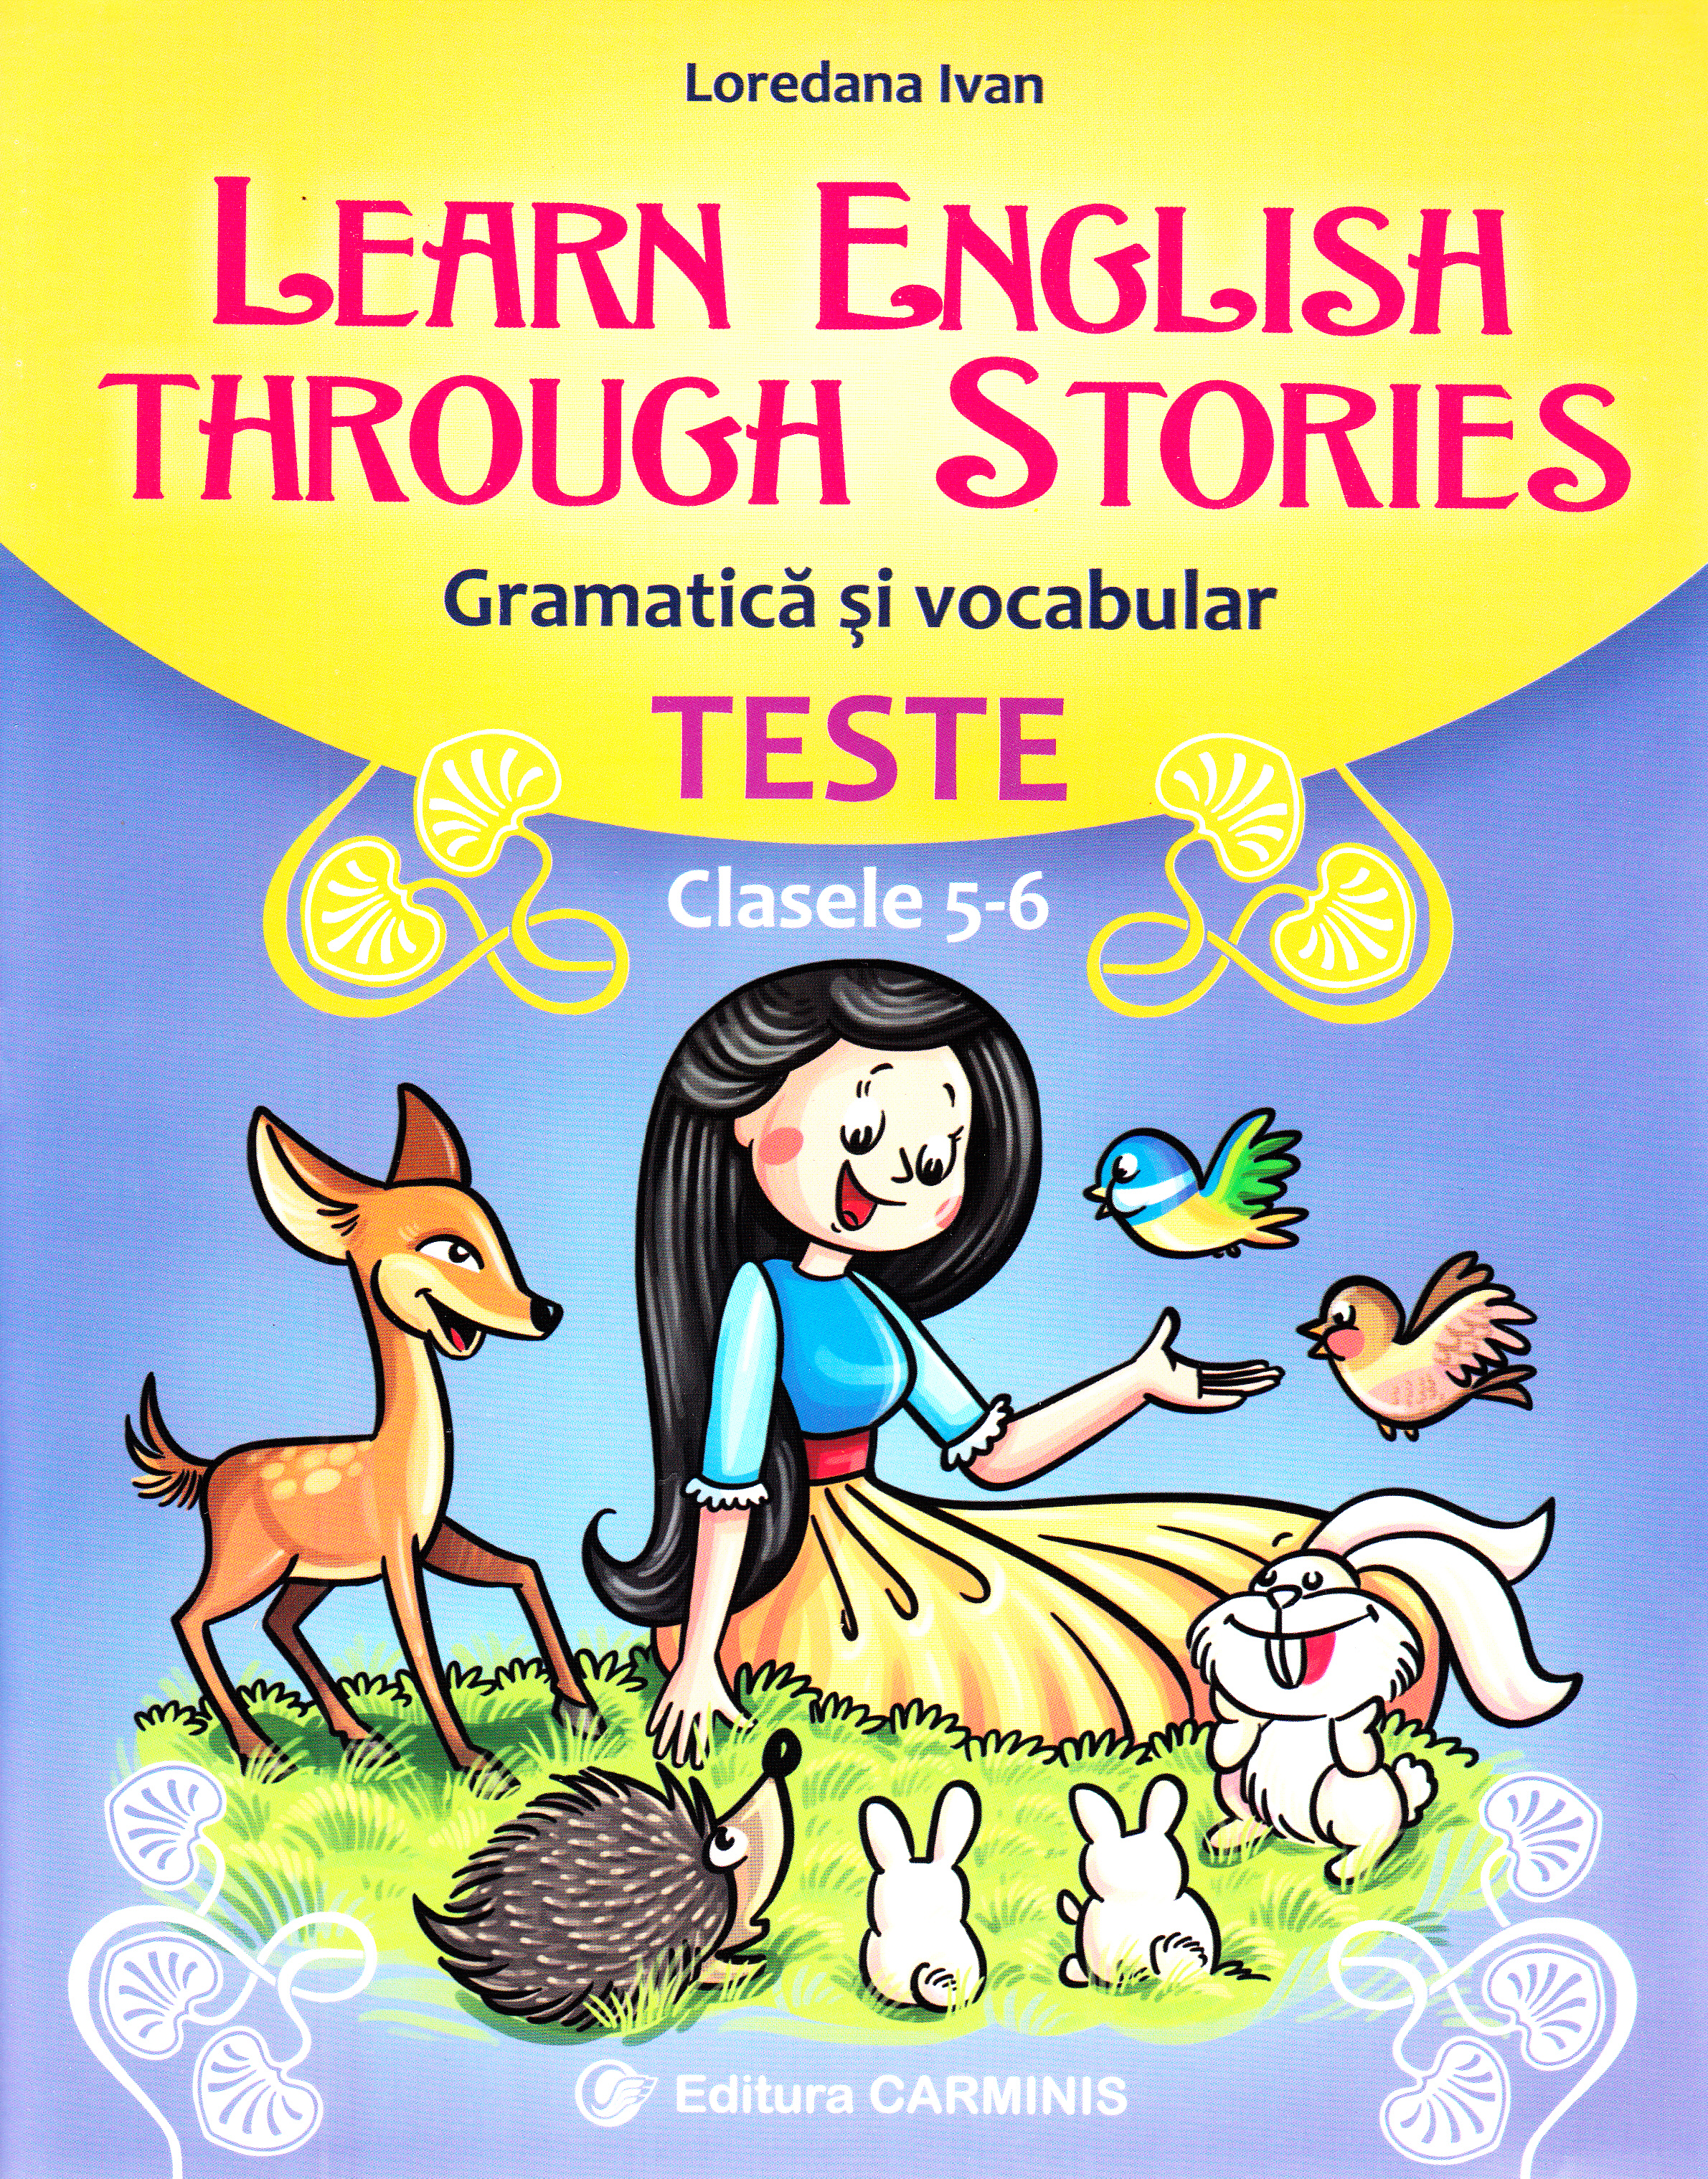 Learn English Through Stories. Gramatica si vocabular. Teste - Clasele 5-6 - Loredana Ivan